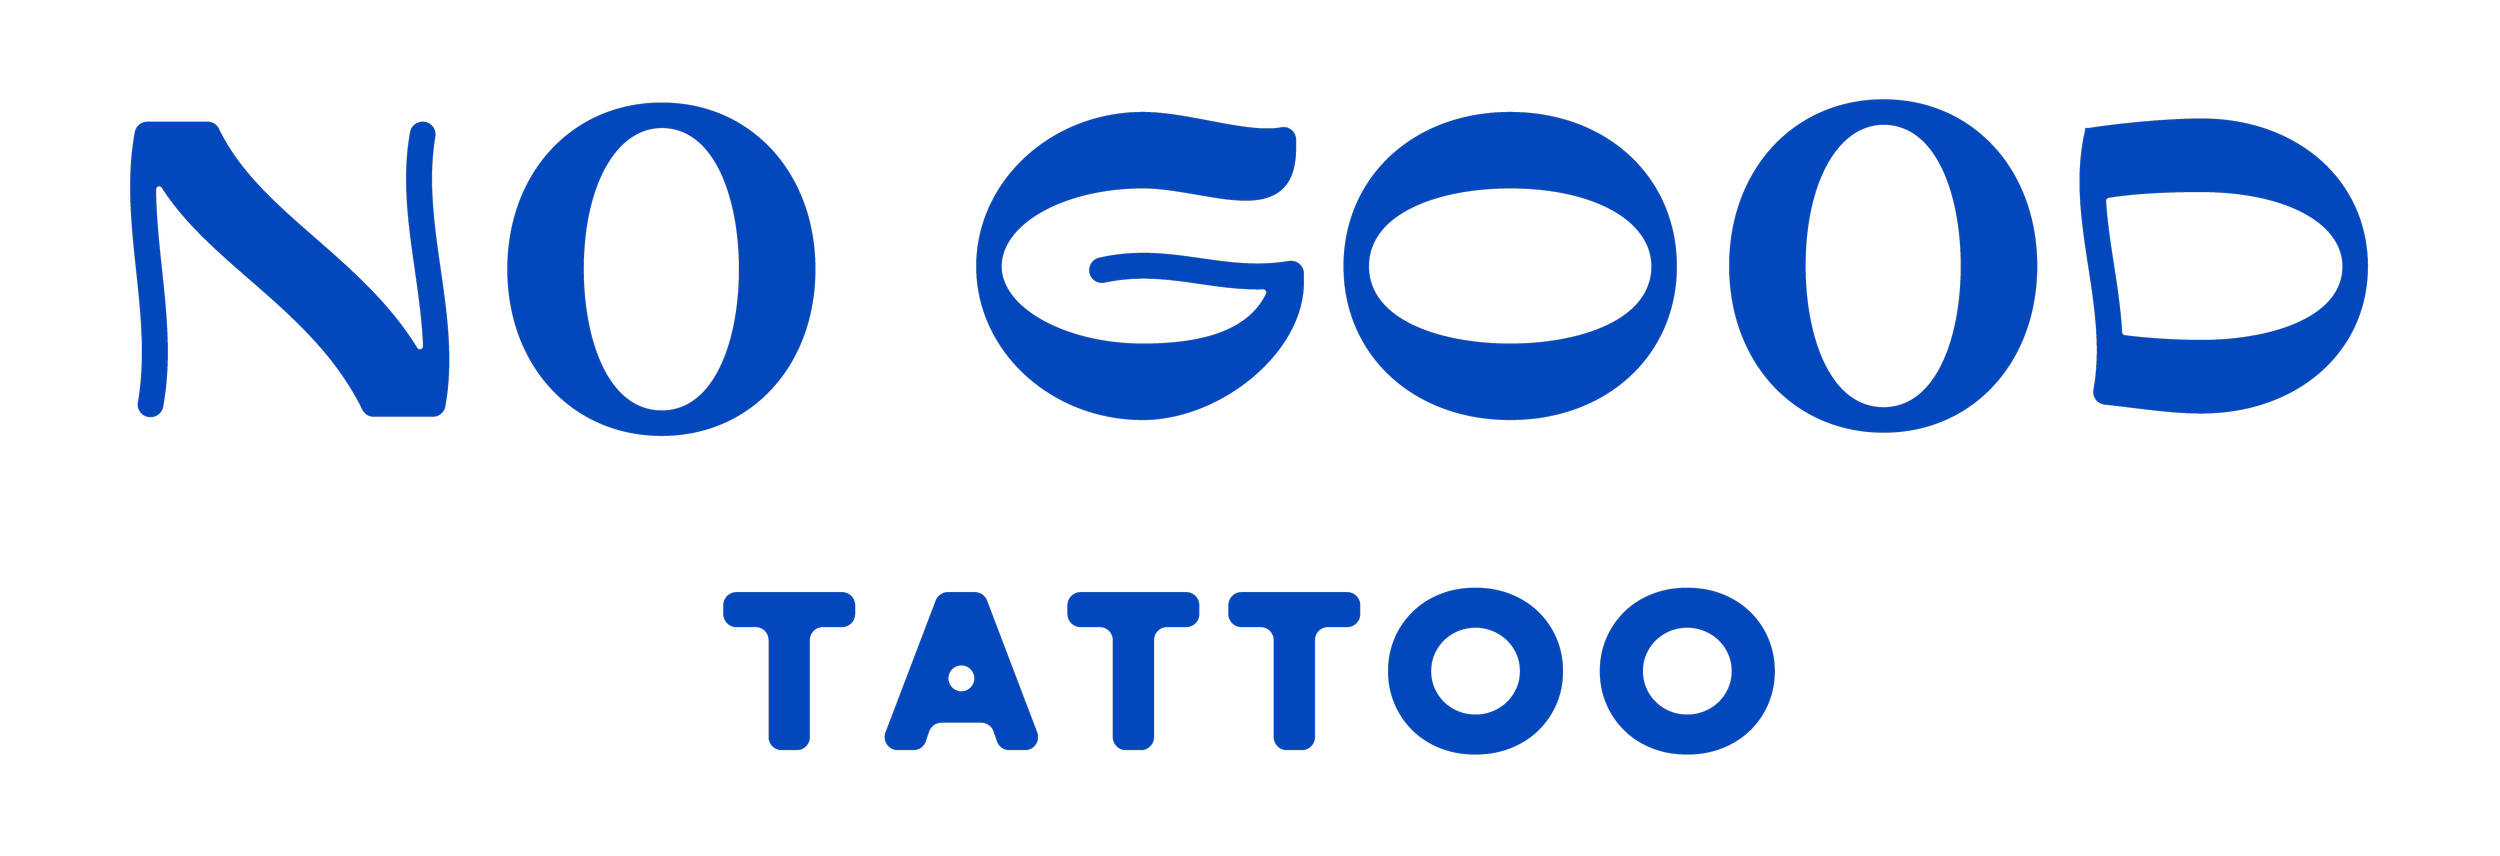 Eastside Tattoo Logo PNG Transparent & SVG Vector - Freebie Supply